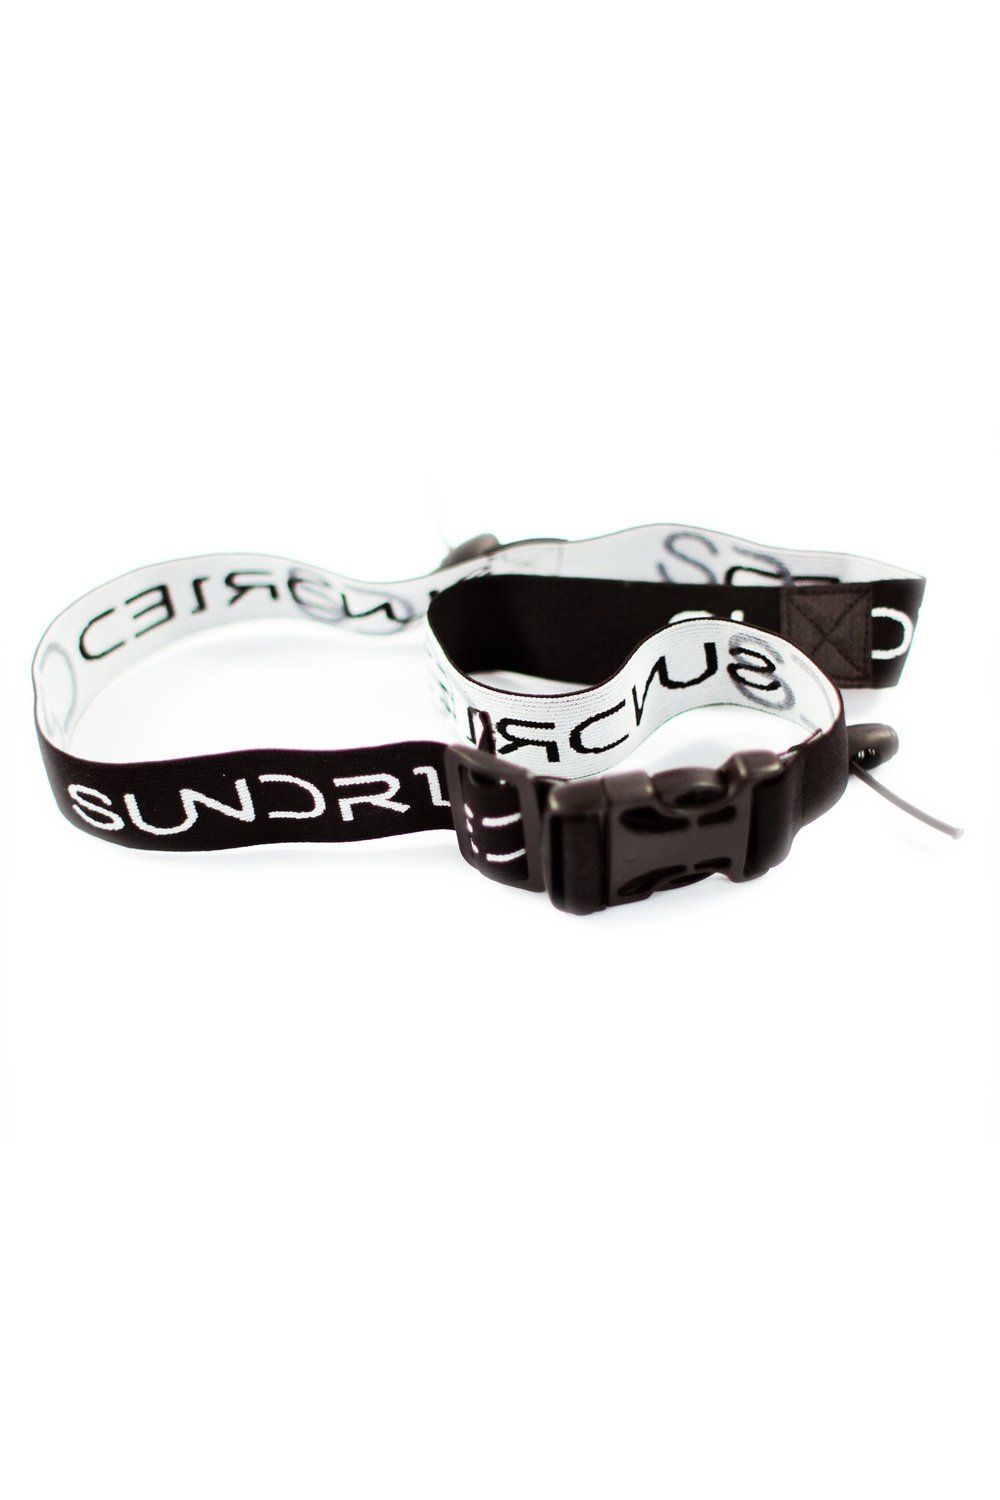 Sundried Race Number Belt. Triathlon Belt Race Accessories Default SDRACEBELT Activewear